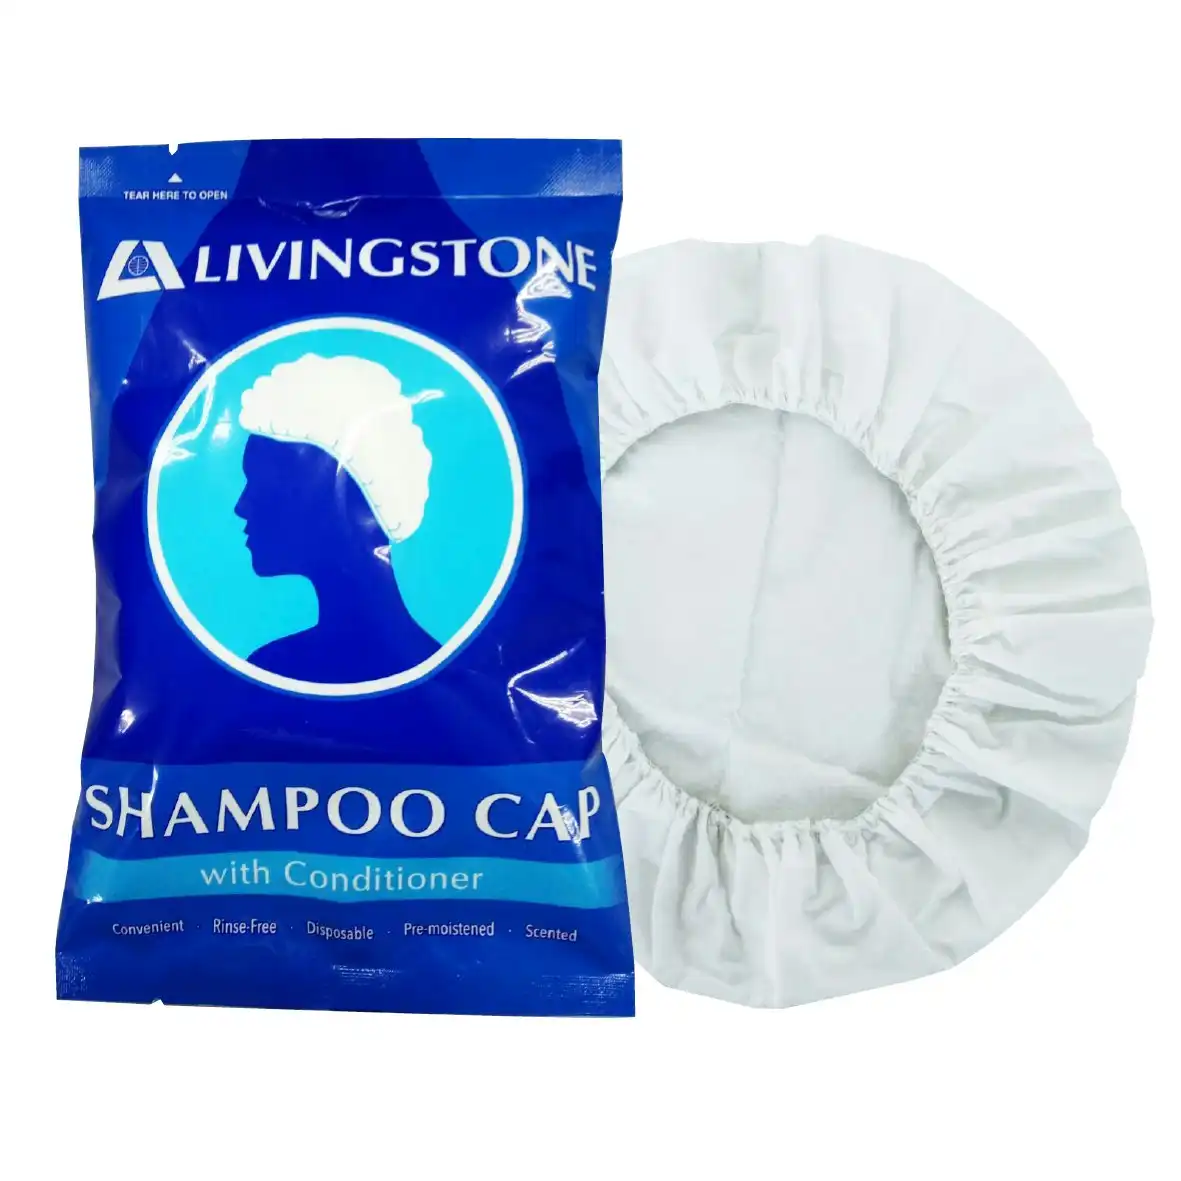 Livingstone Shampoo Cap 1 Pack